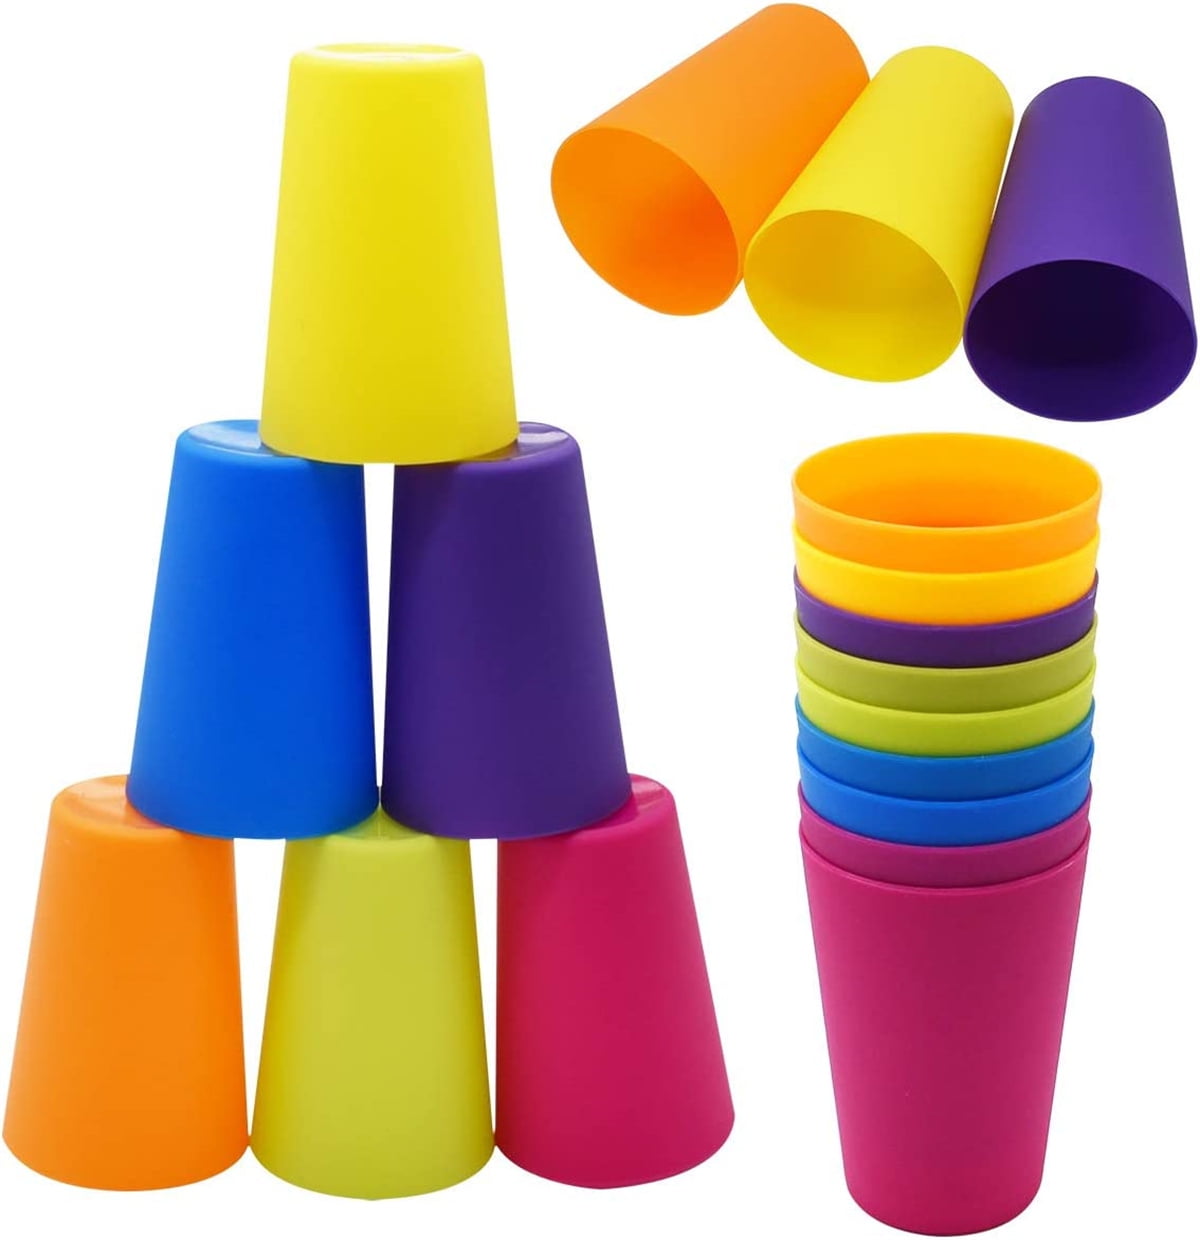  120 Pcs 5.5 oz Kids Plastic Cups Reusable Bulk Small